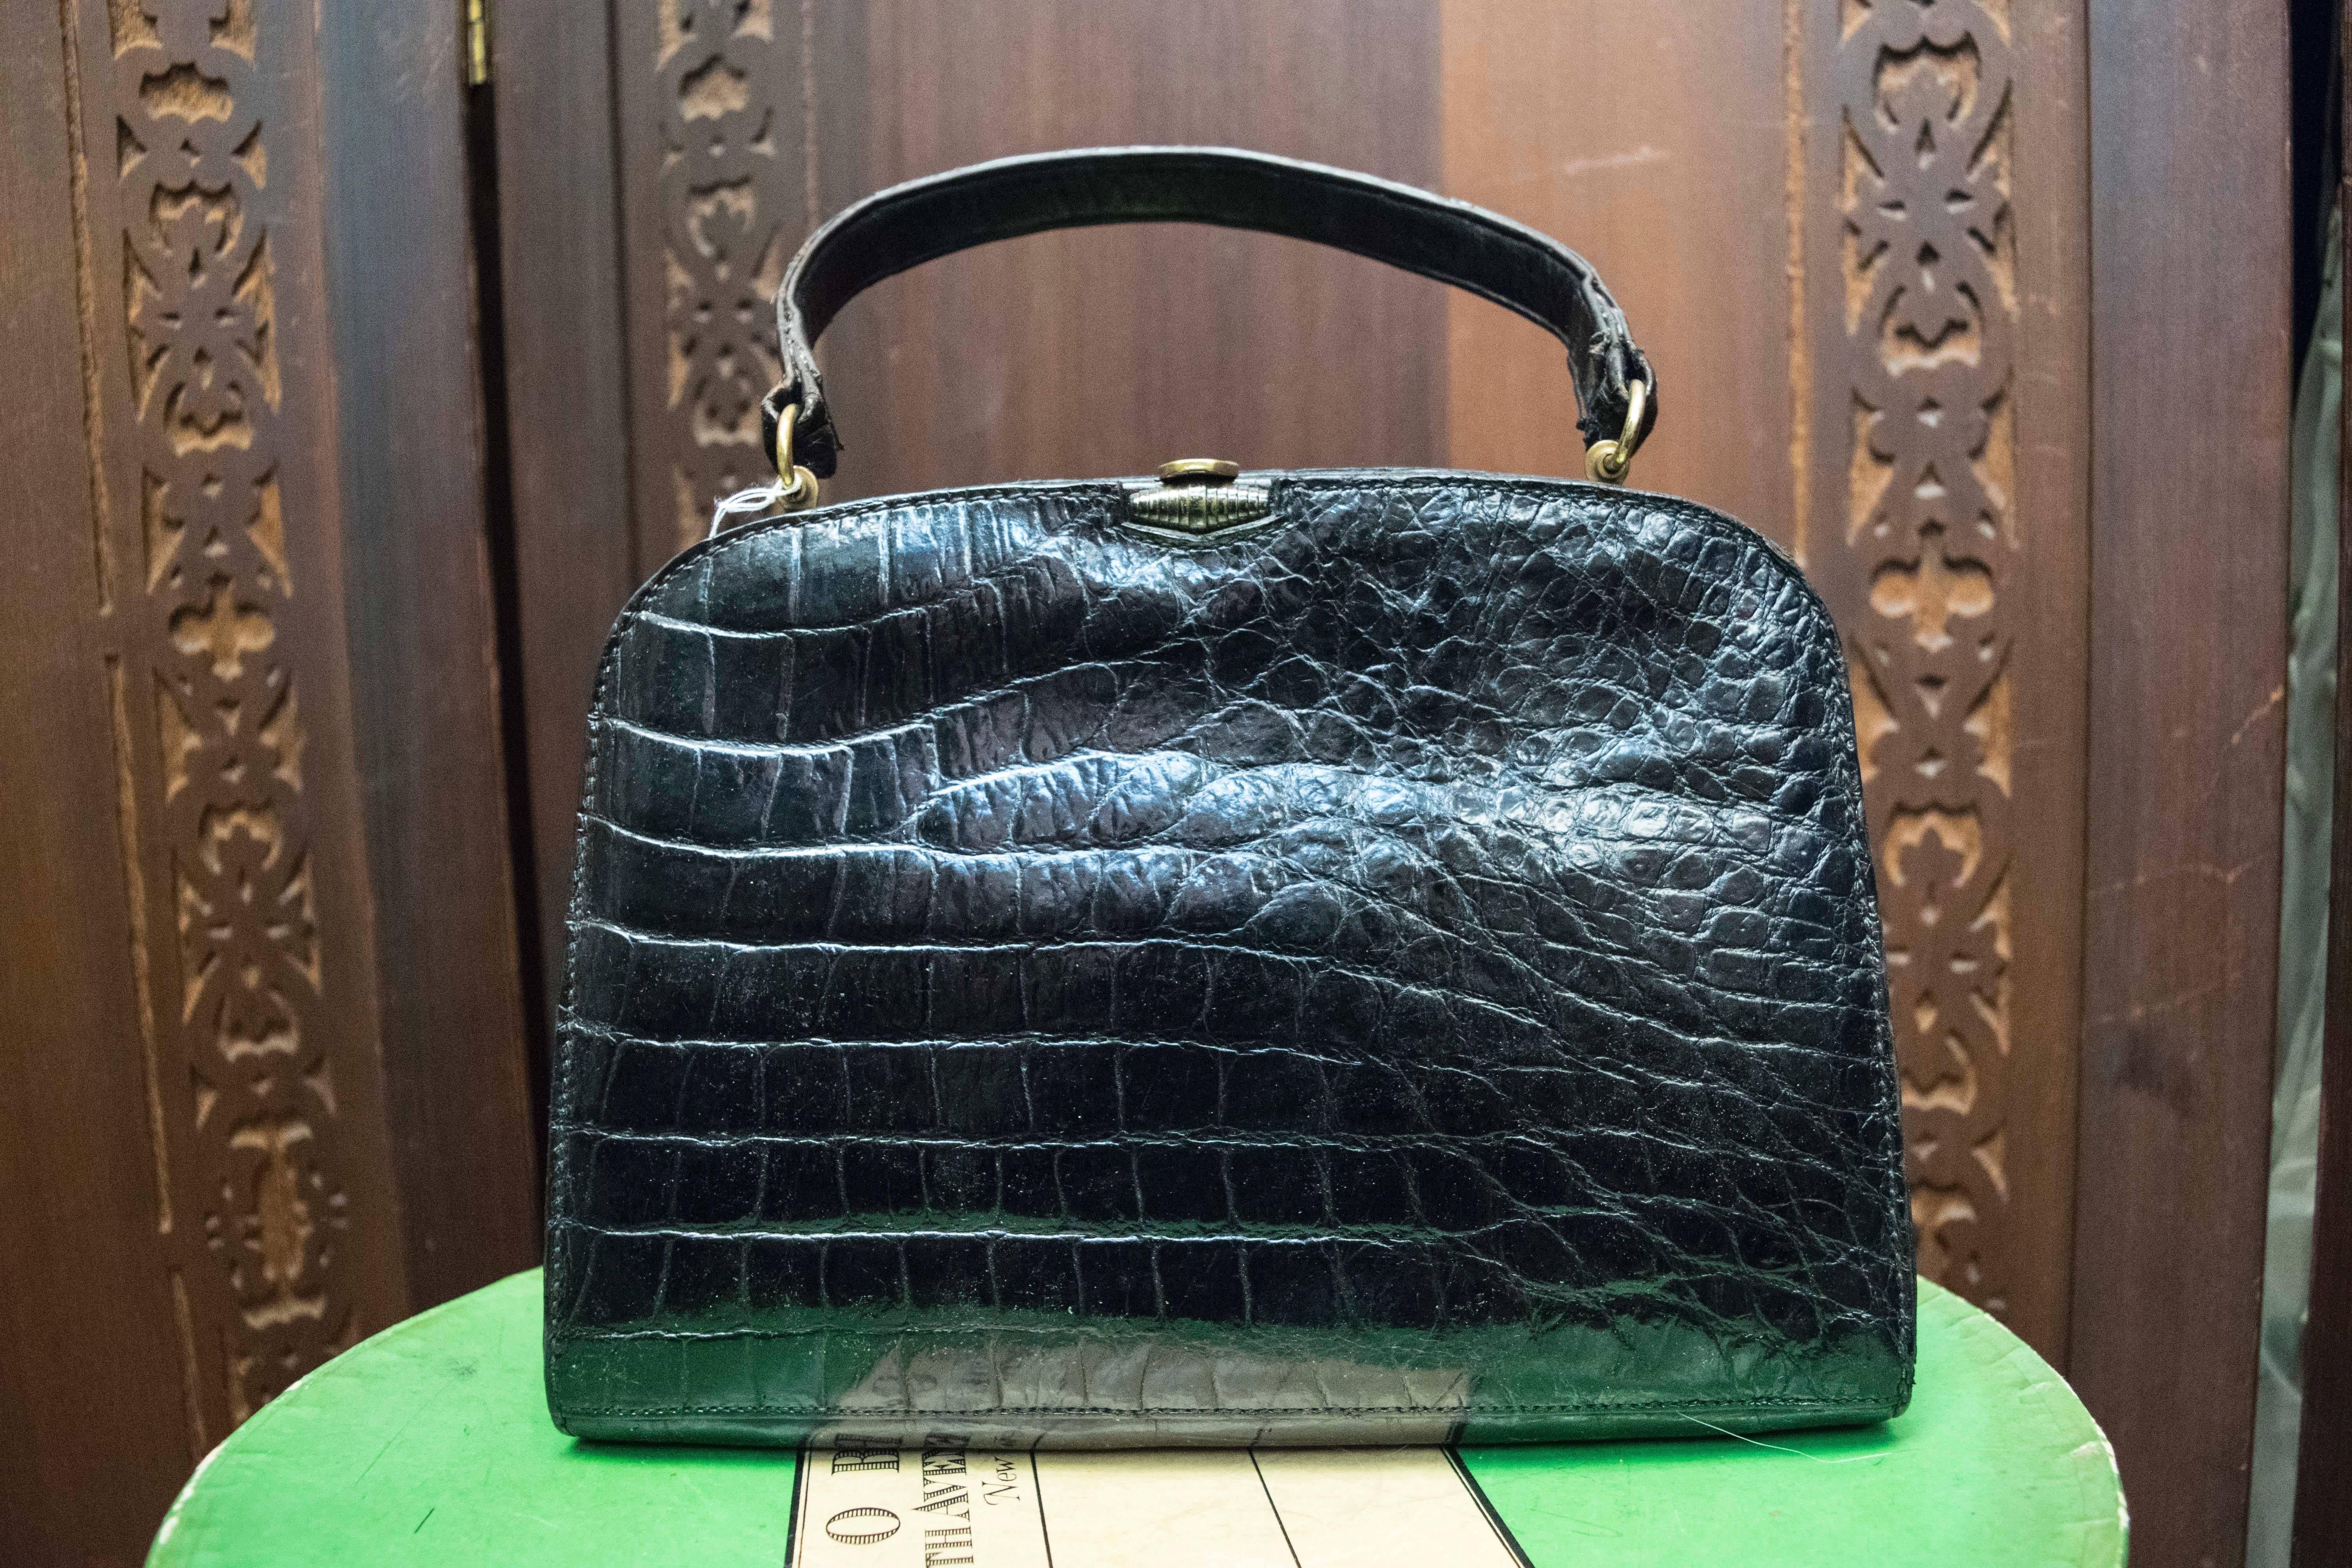 1950s Black Alligator Handbag

L 10.5
H 7 
D 3
